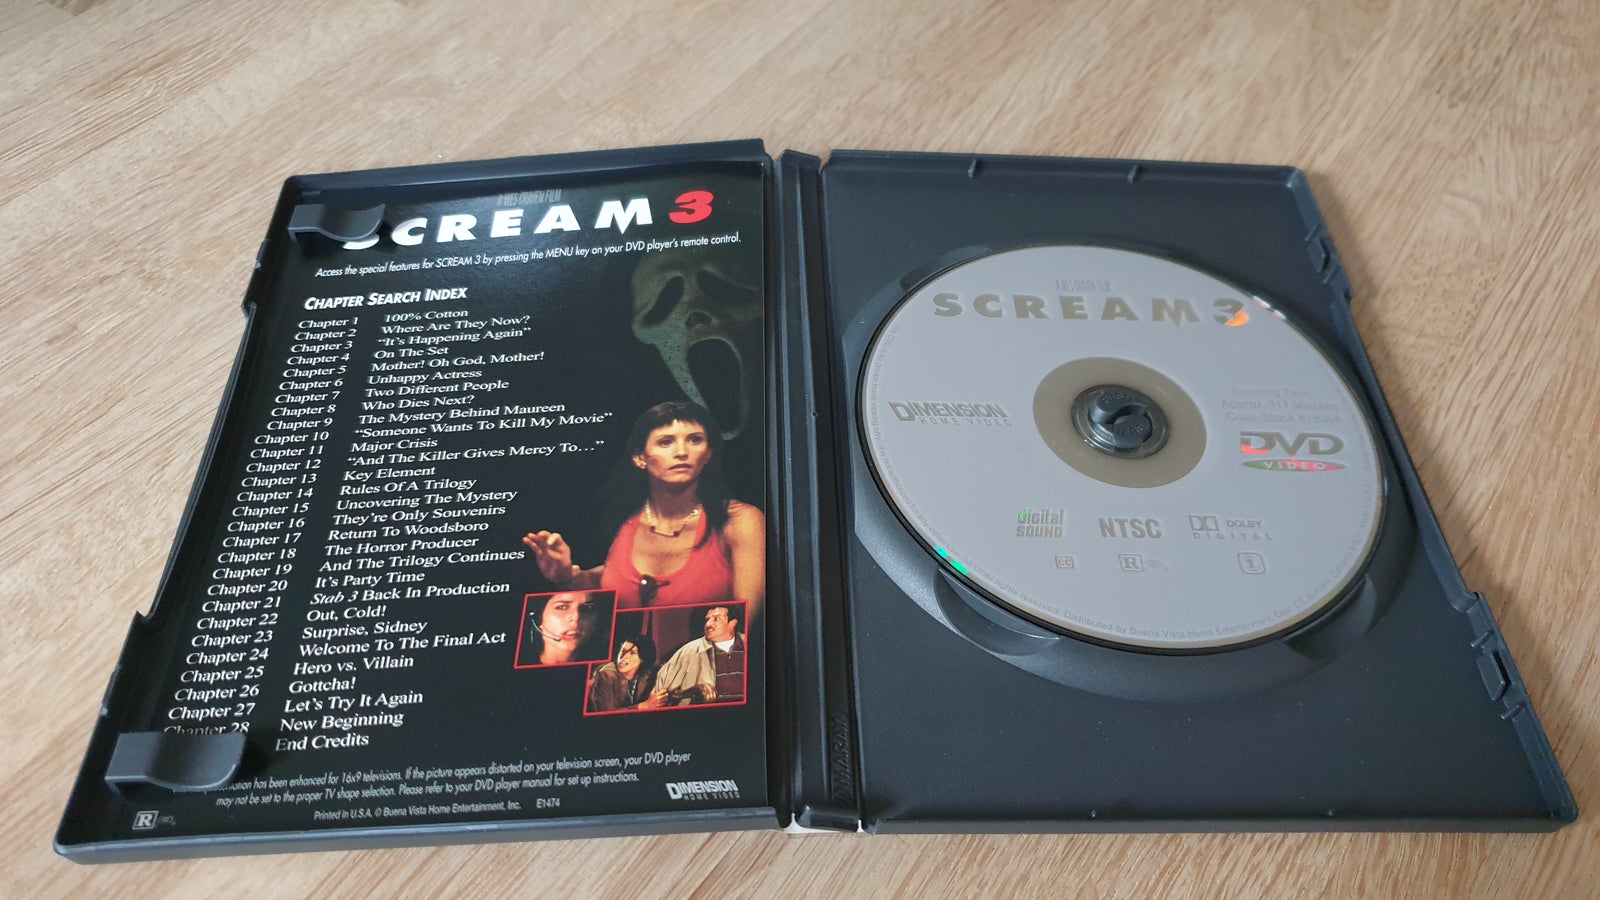 Scream 3 (Collectors Series), instruktør Wes Craven, DVD